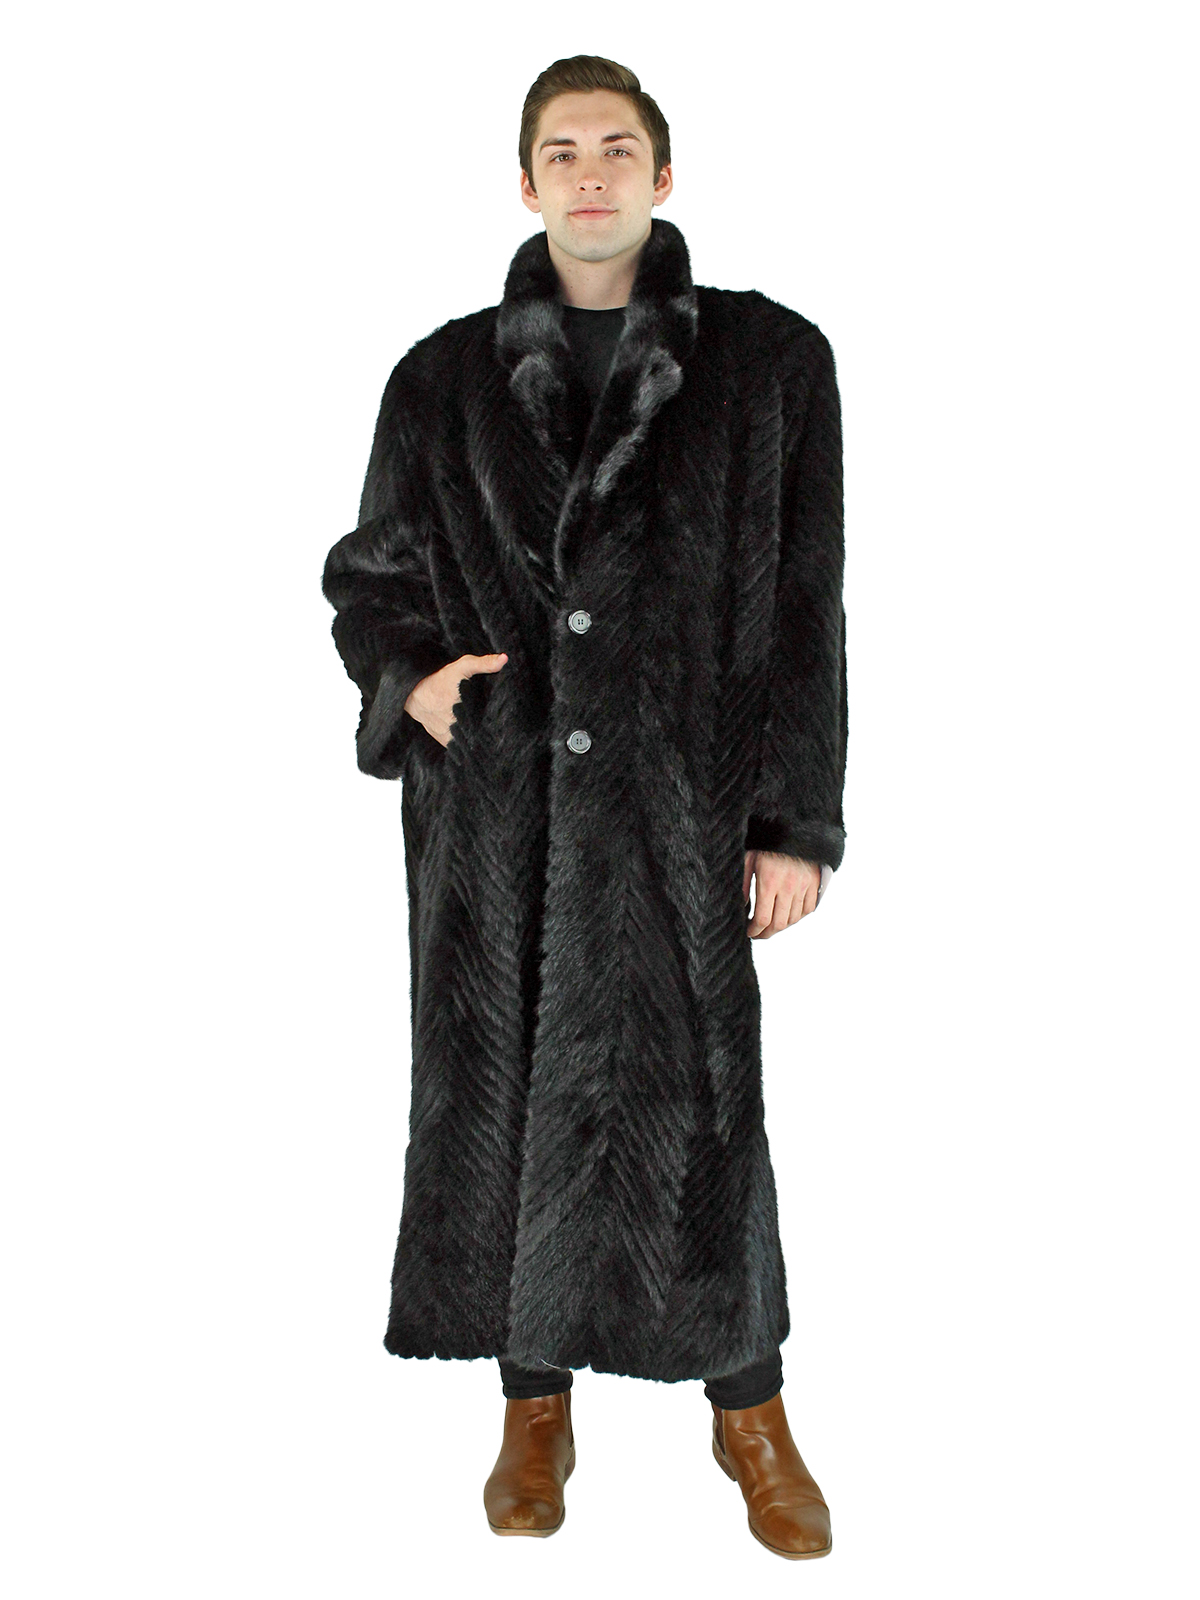 Black Sheared Mink Tails Fur Coat - Men's Fur Coat - XL | Day Furs